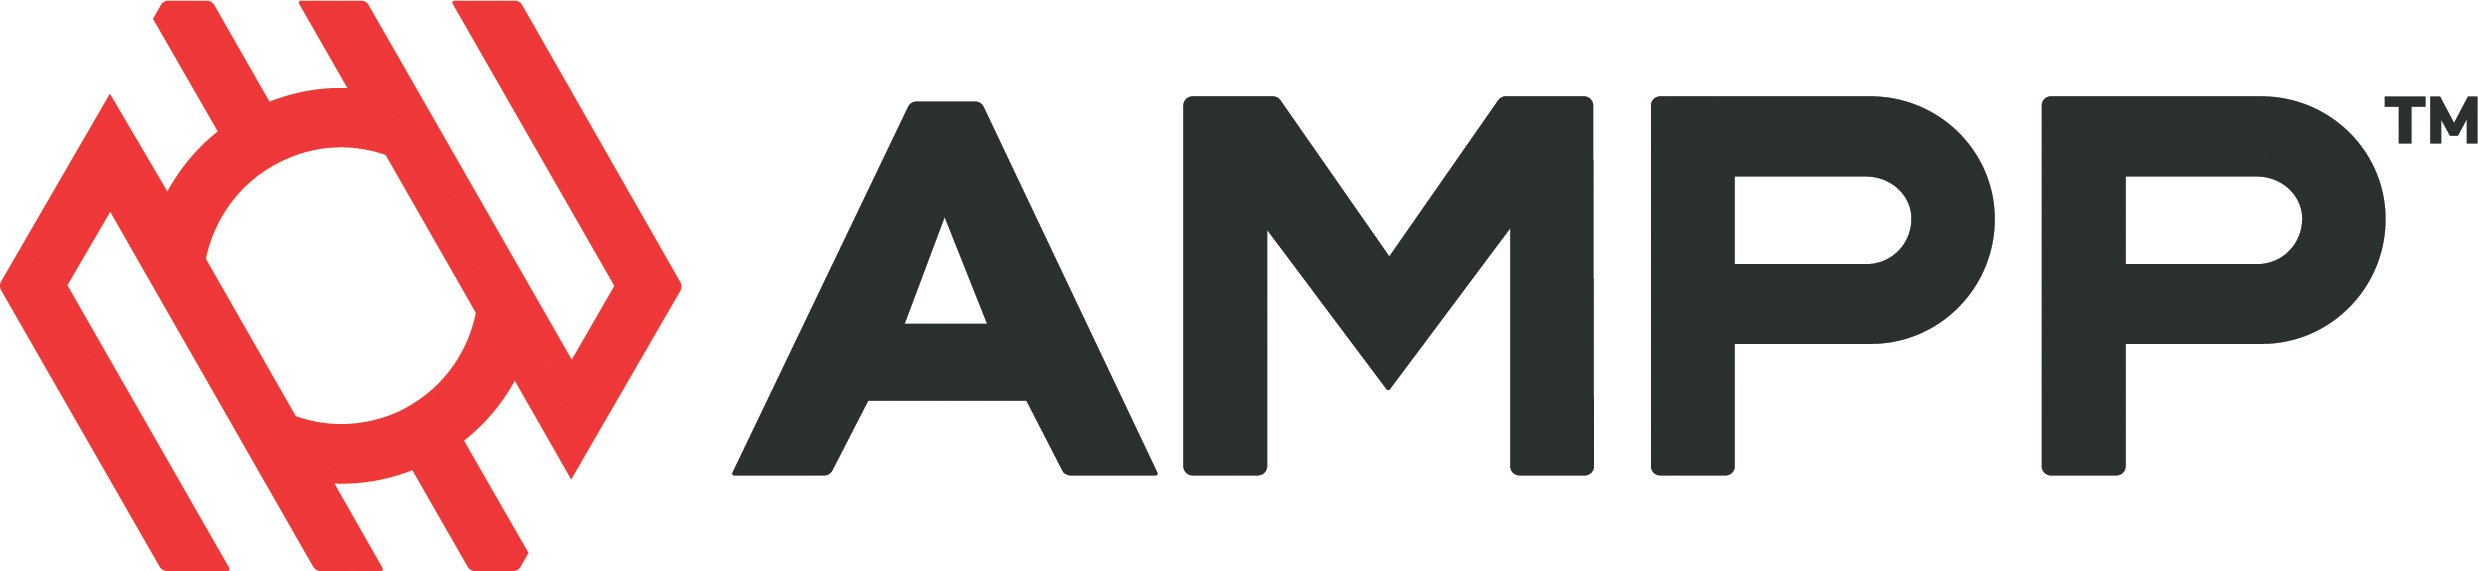 AMPP_Logo_highres.jpg